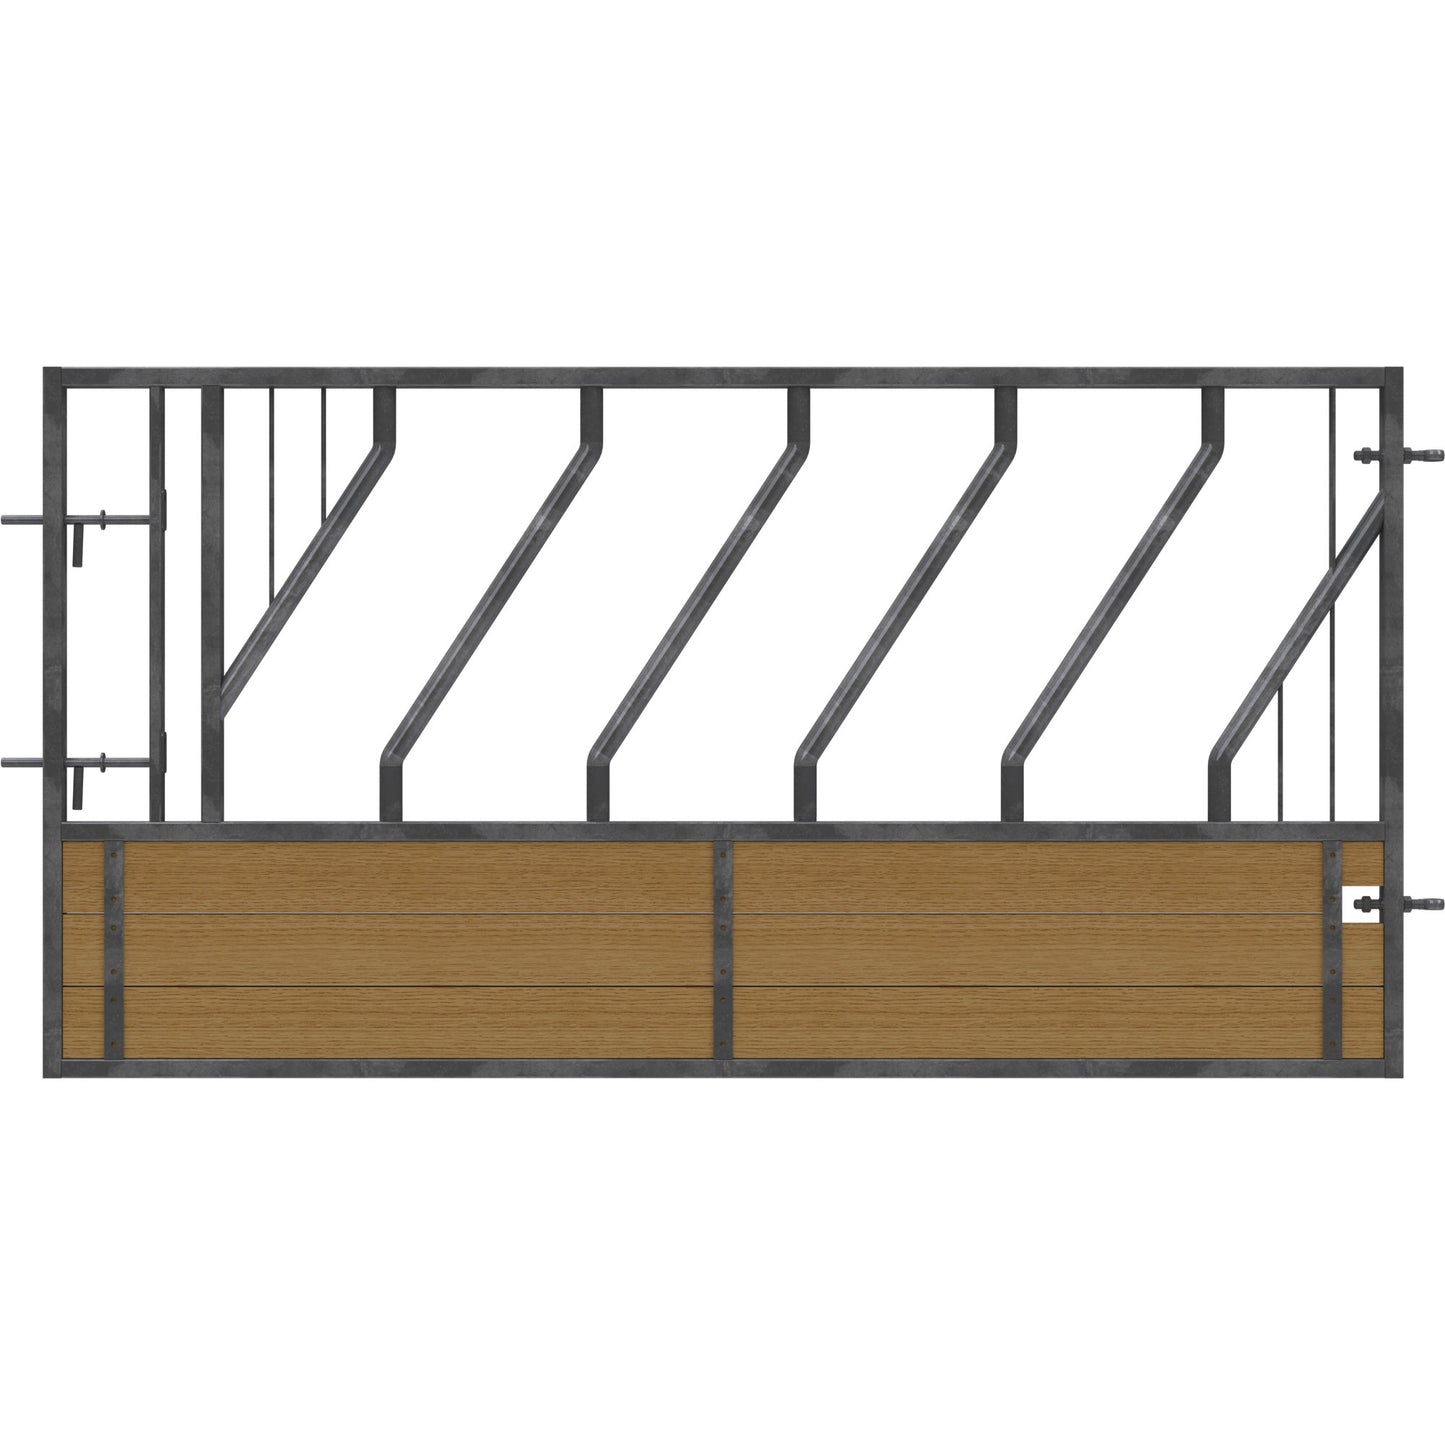 Pedigree Diagonal Feed Barrier Gate Unit c/w timber base